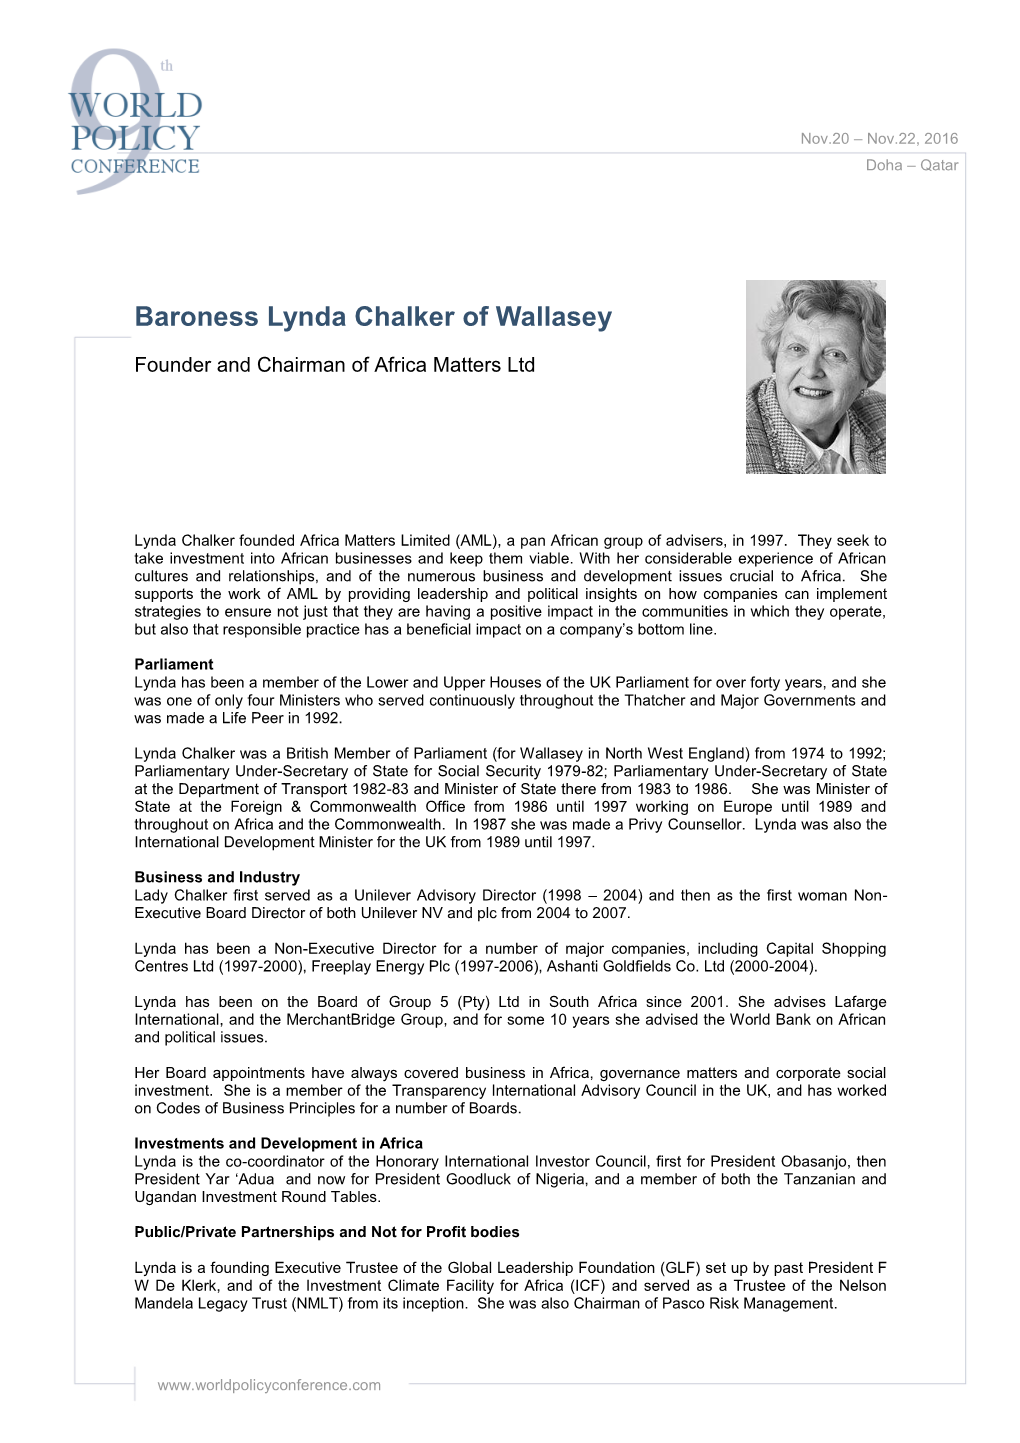 Baroness Lynda Chalker of Wallasey